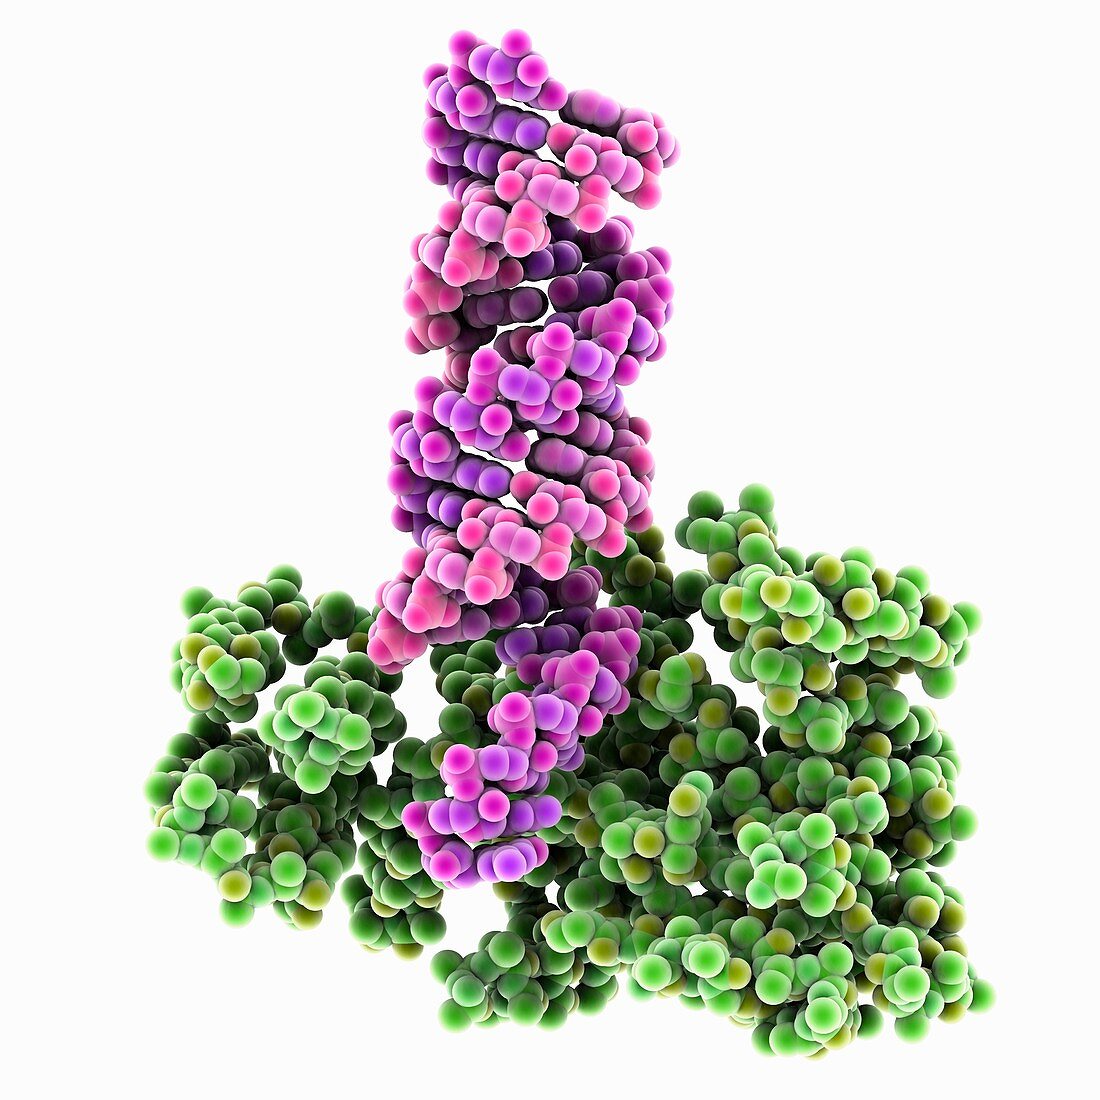 Dicer-dsRNA complex, molecular model